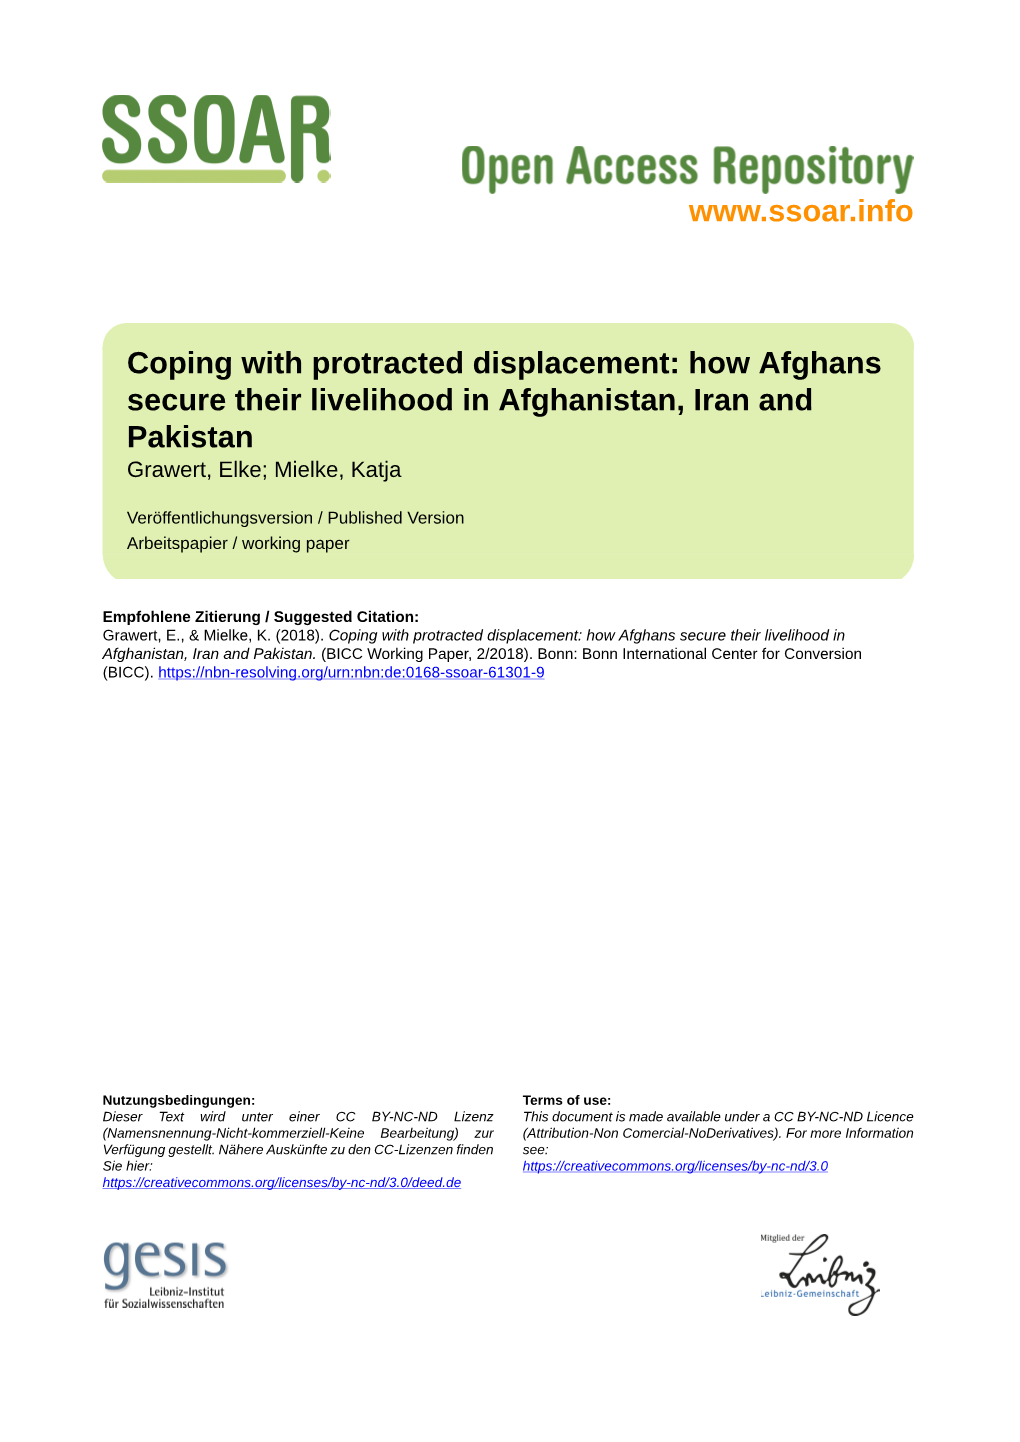 Coping with Protracted Displacement: How Afghans Secure Their Livelihood in Afghanistan, Iran and Pakistan Grawert, Elke; Mielke, Katja